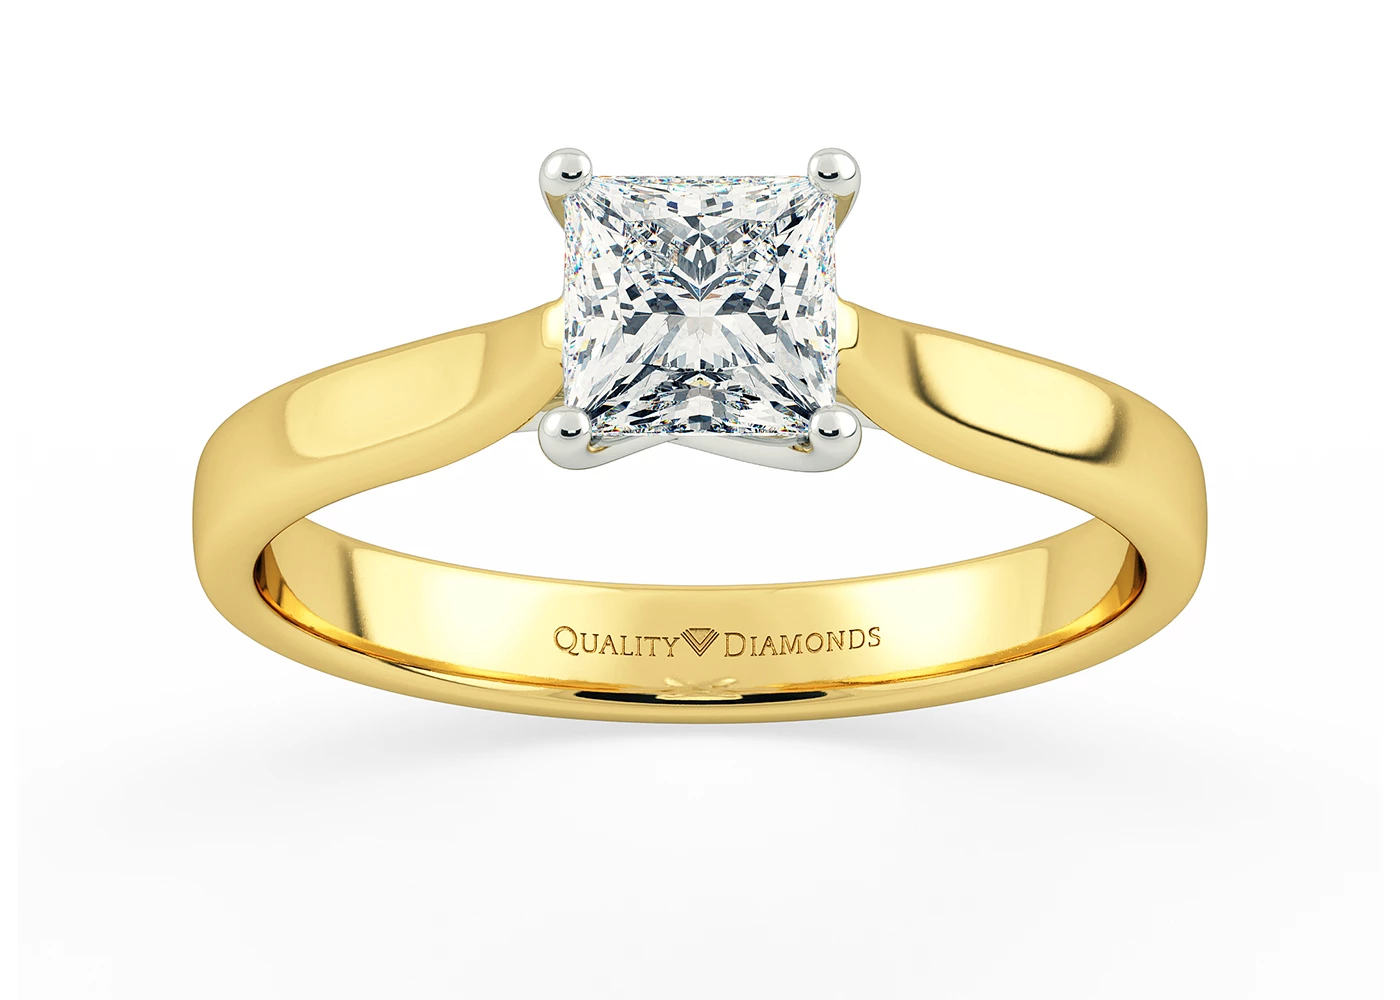 Princess Mirabelle Diamond Ring in 18K Yellow Gold